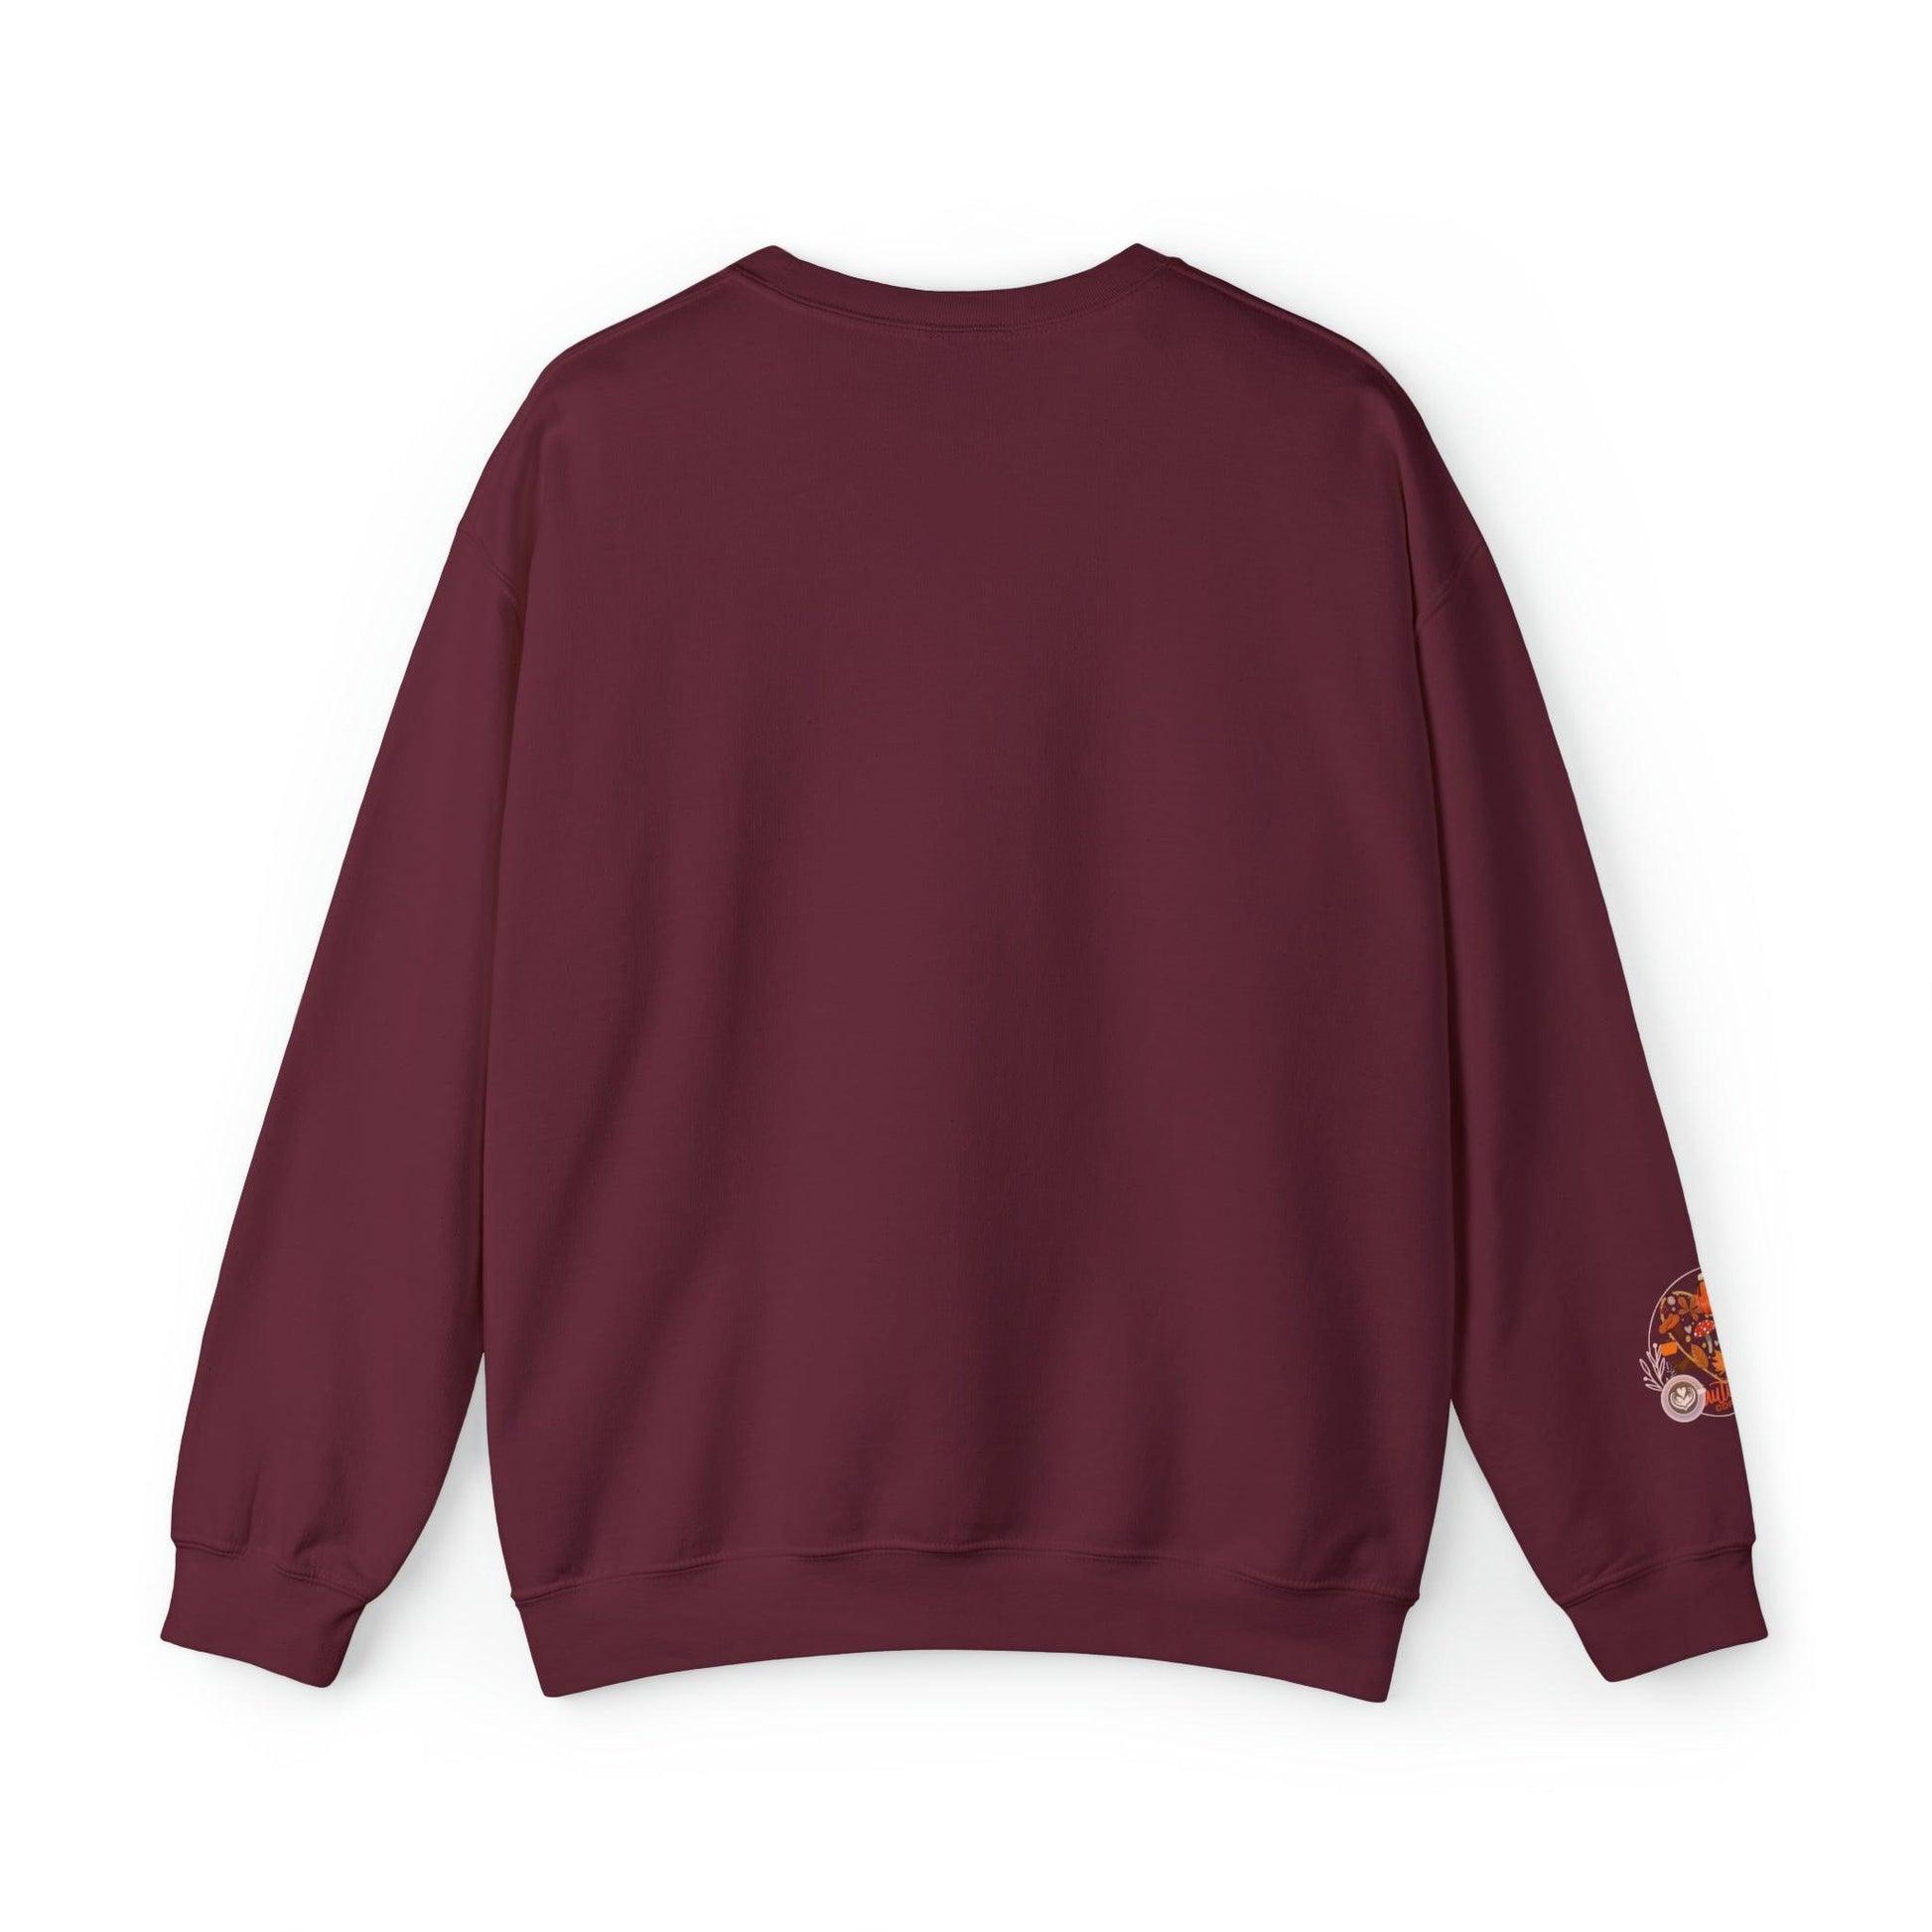 Coffeebre Lifestyle Fall Loungewear Crewneck Sweatshirt - COFFEEBRE